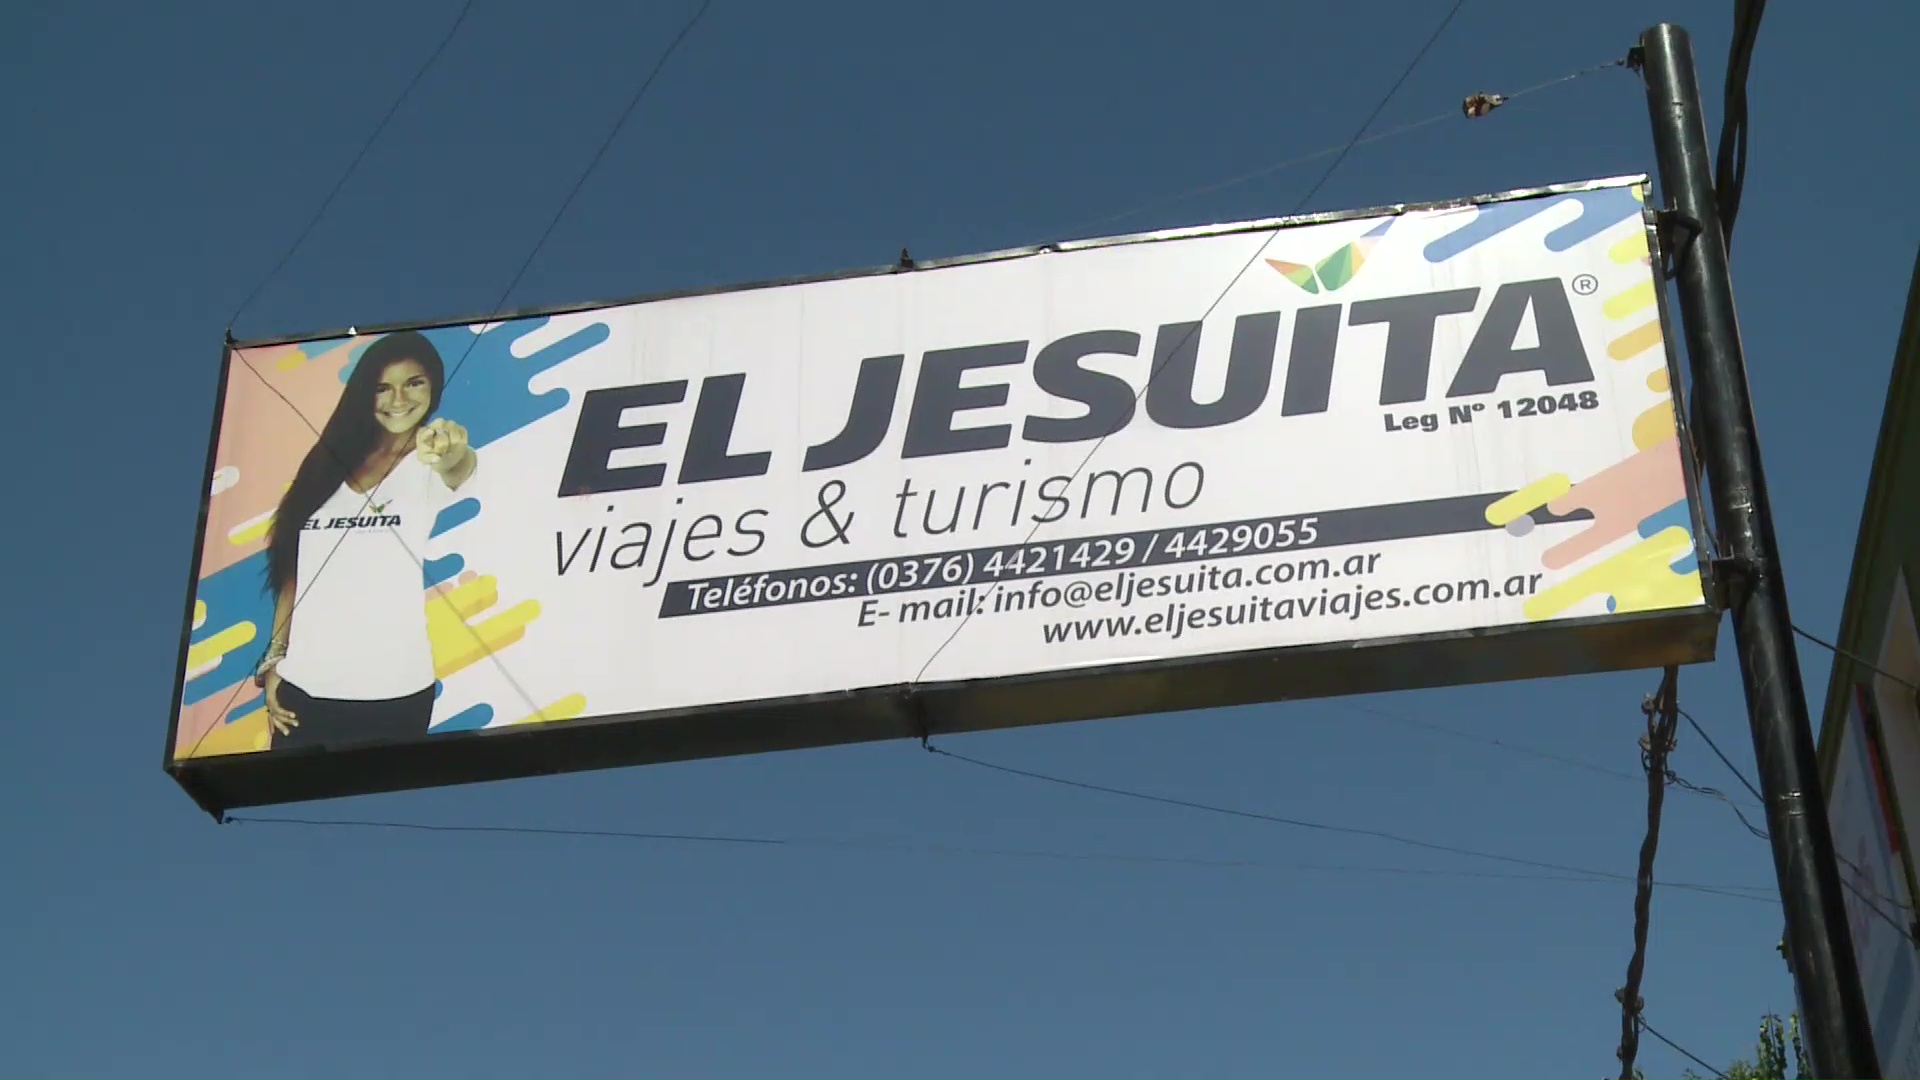 La agencia de turismo “El Jesuita” se desvincula de estafa turística